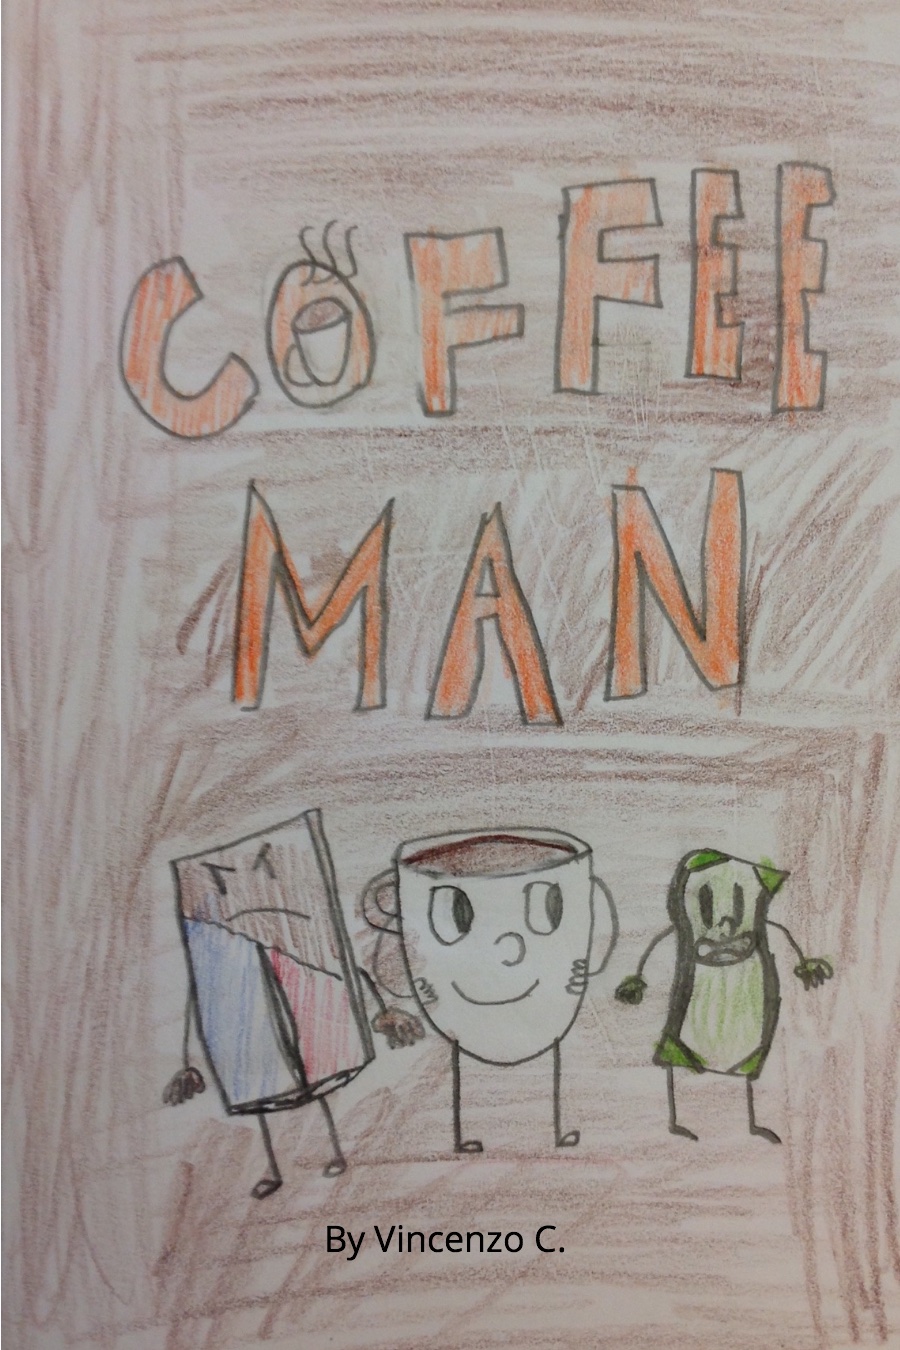 Coffee man by Vincenzo C